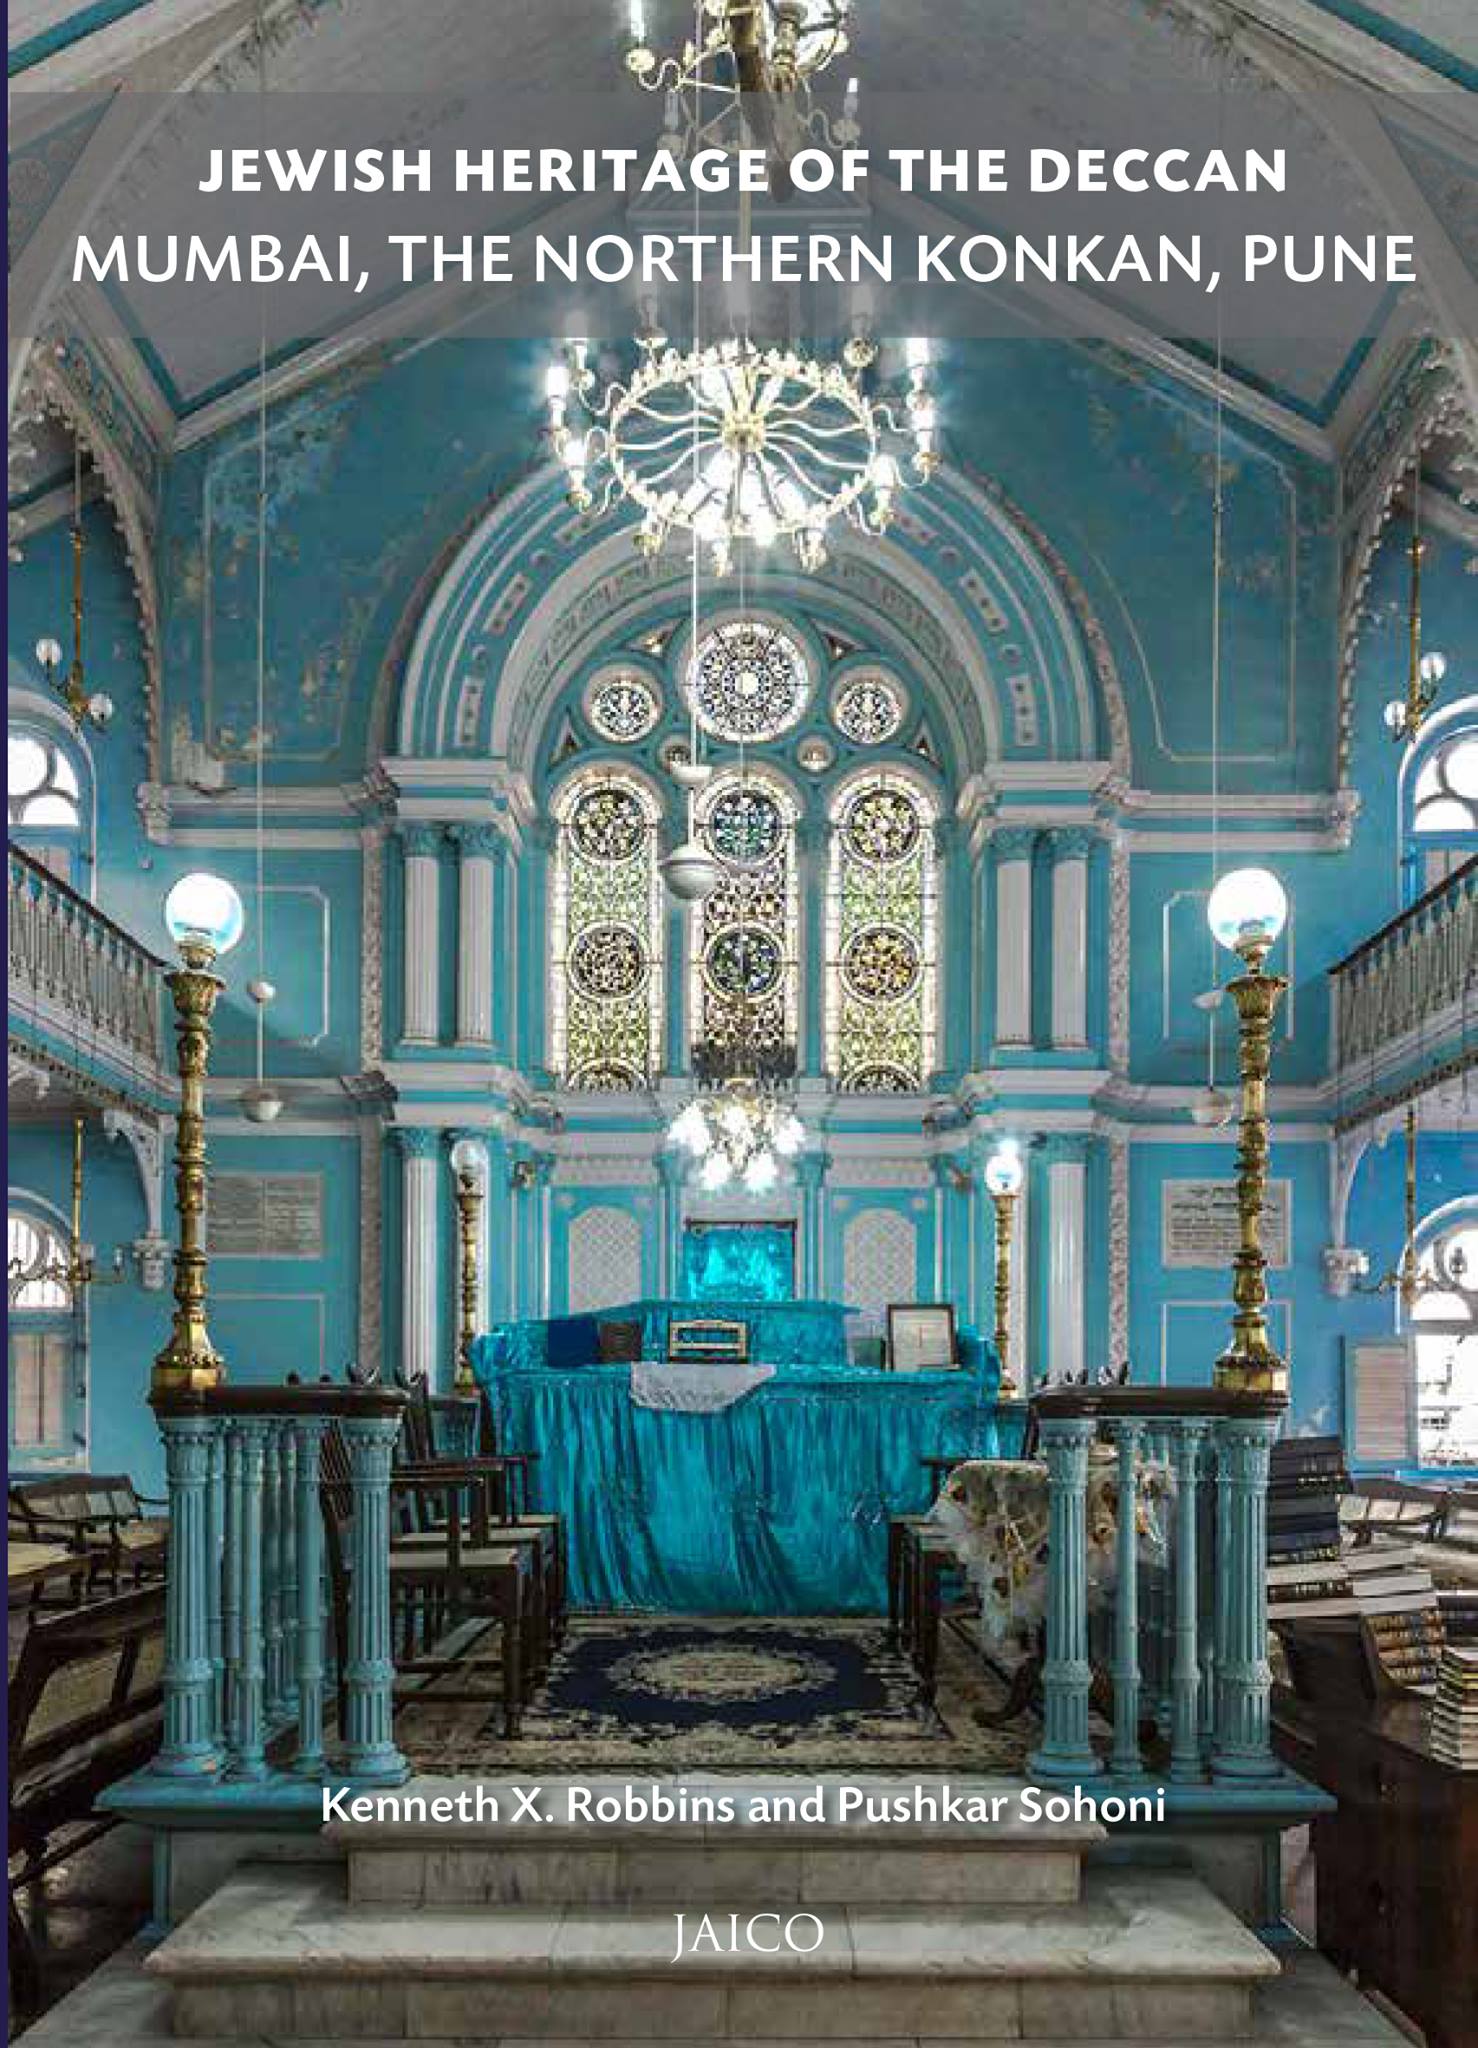 Jewish Heritage of the Deccan Book Talk